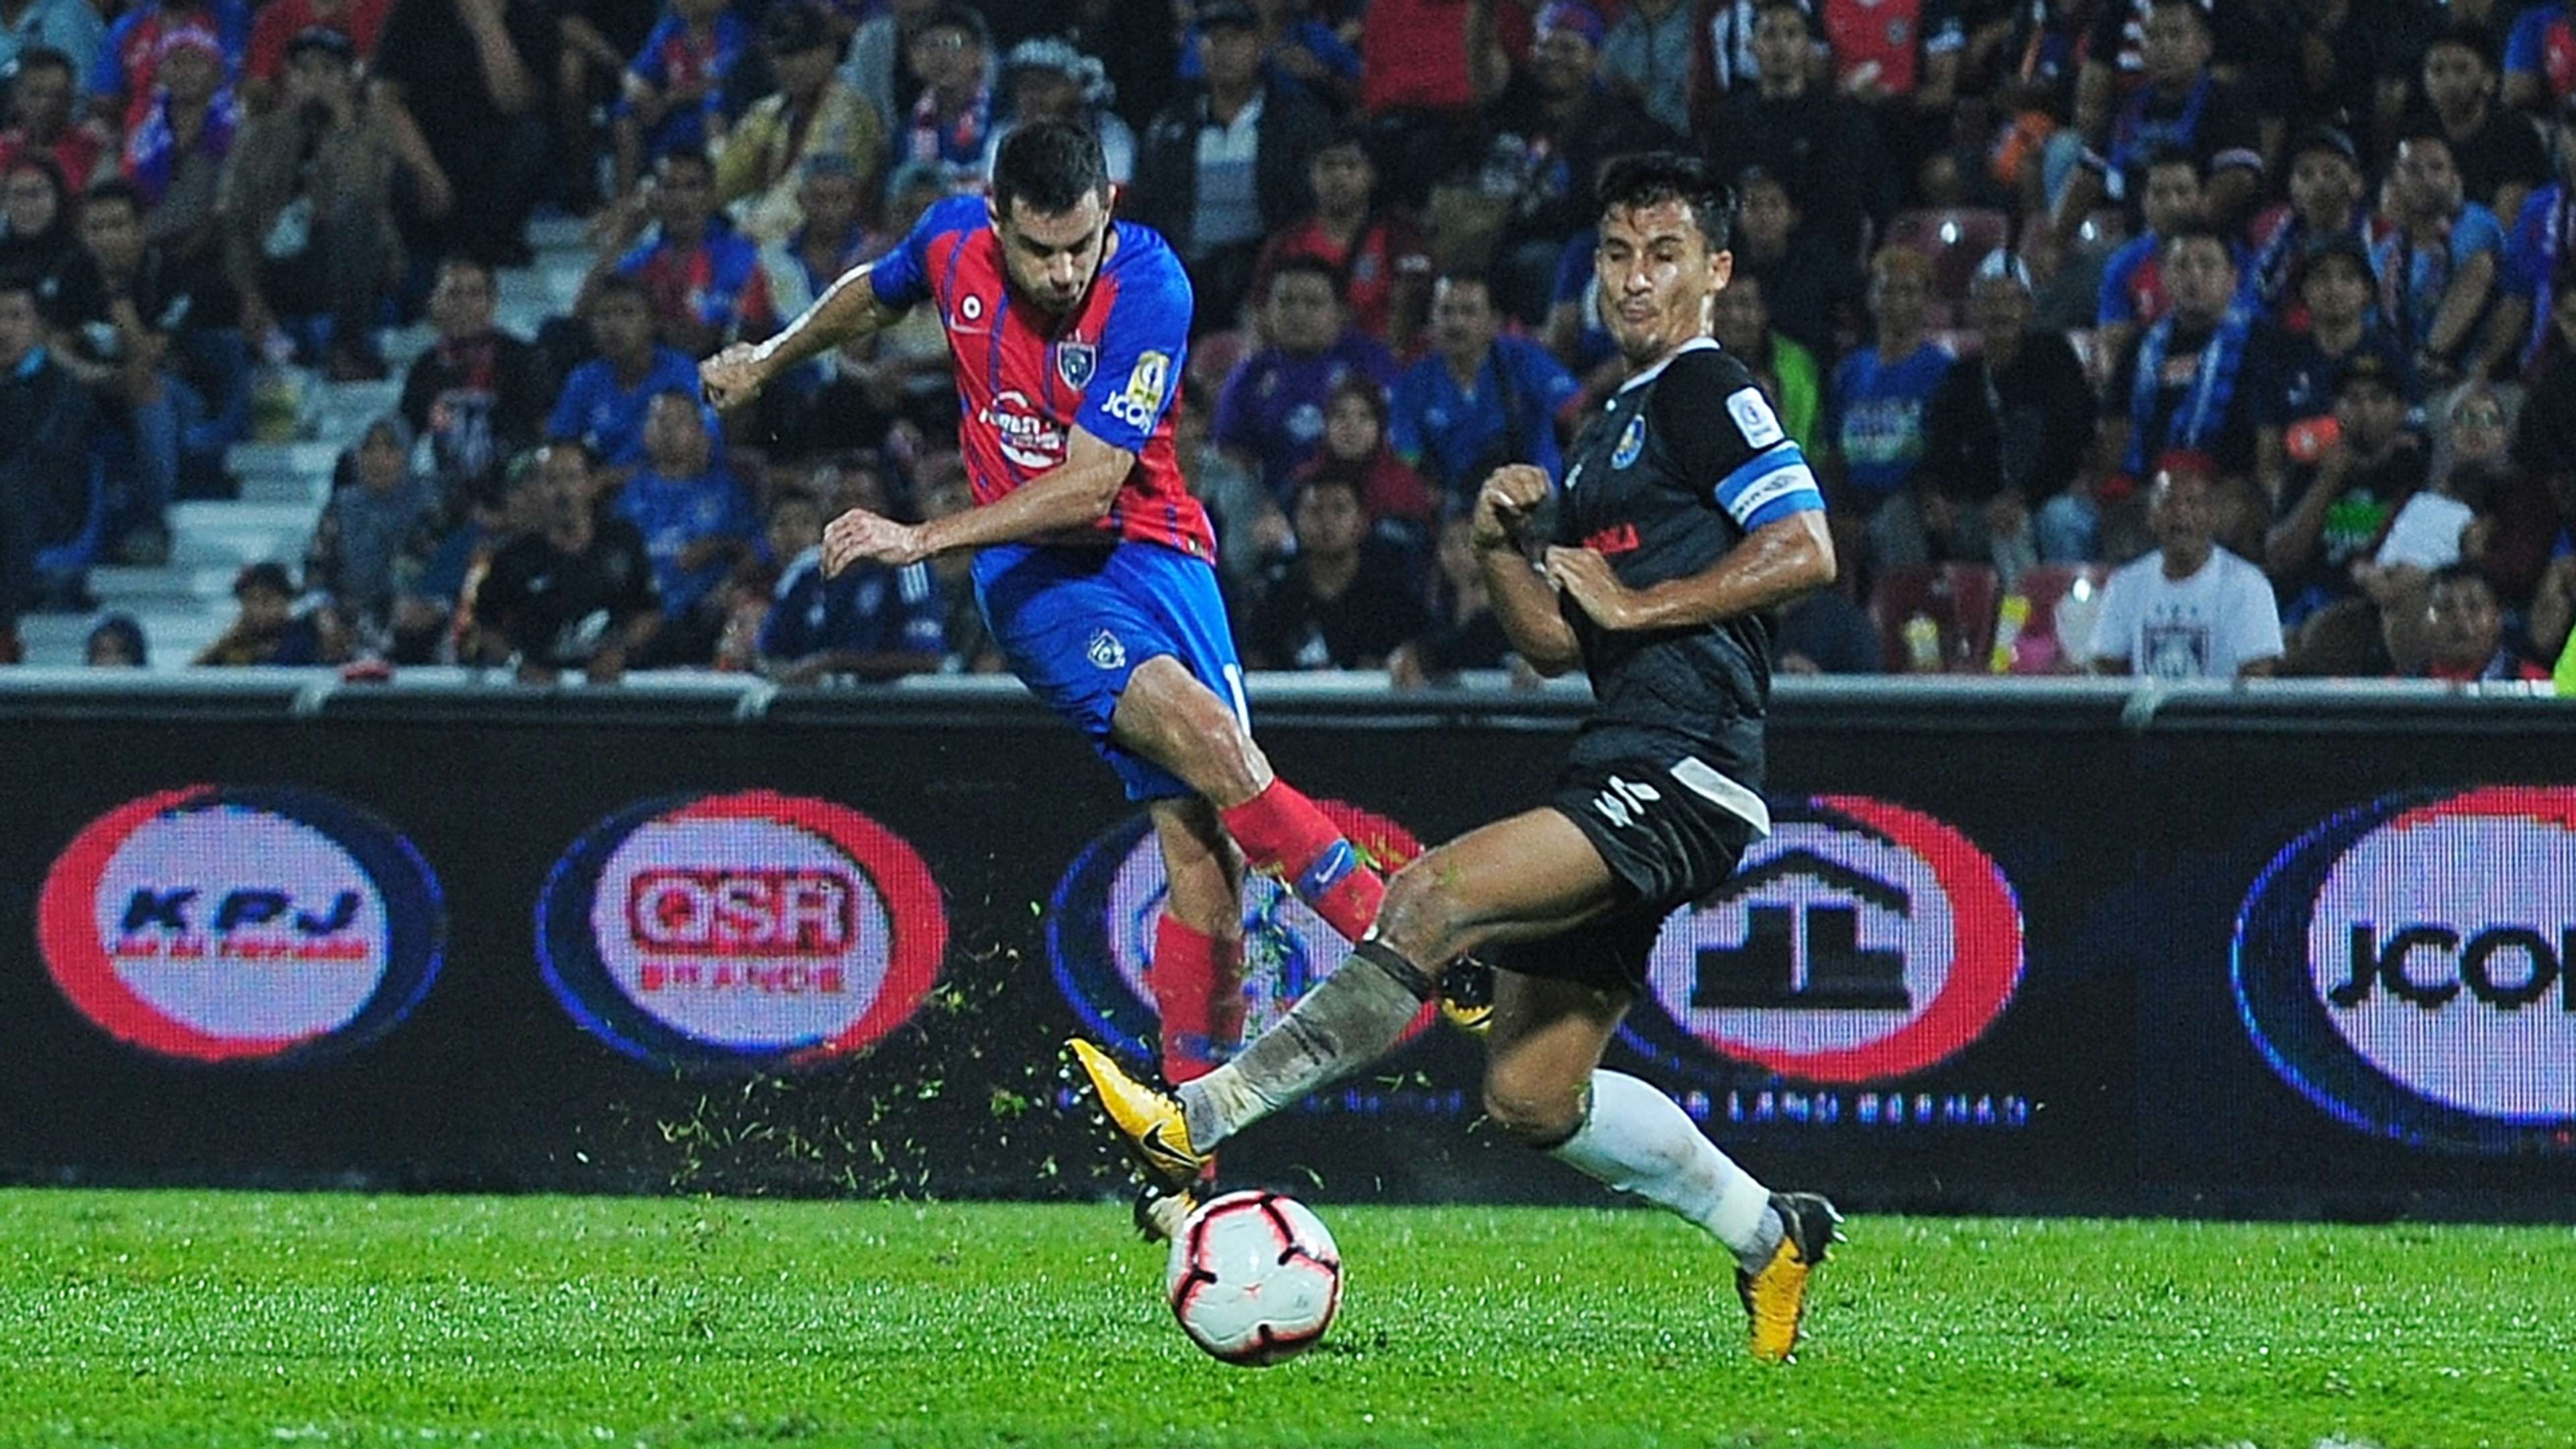 Matthew Davies, Johor Darul Ta'zim v Pahang, Malaysia Super League, 14 May 2019